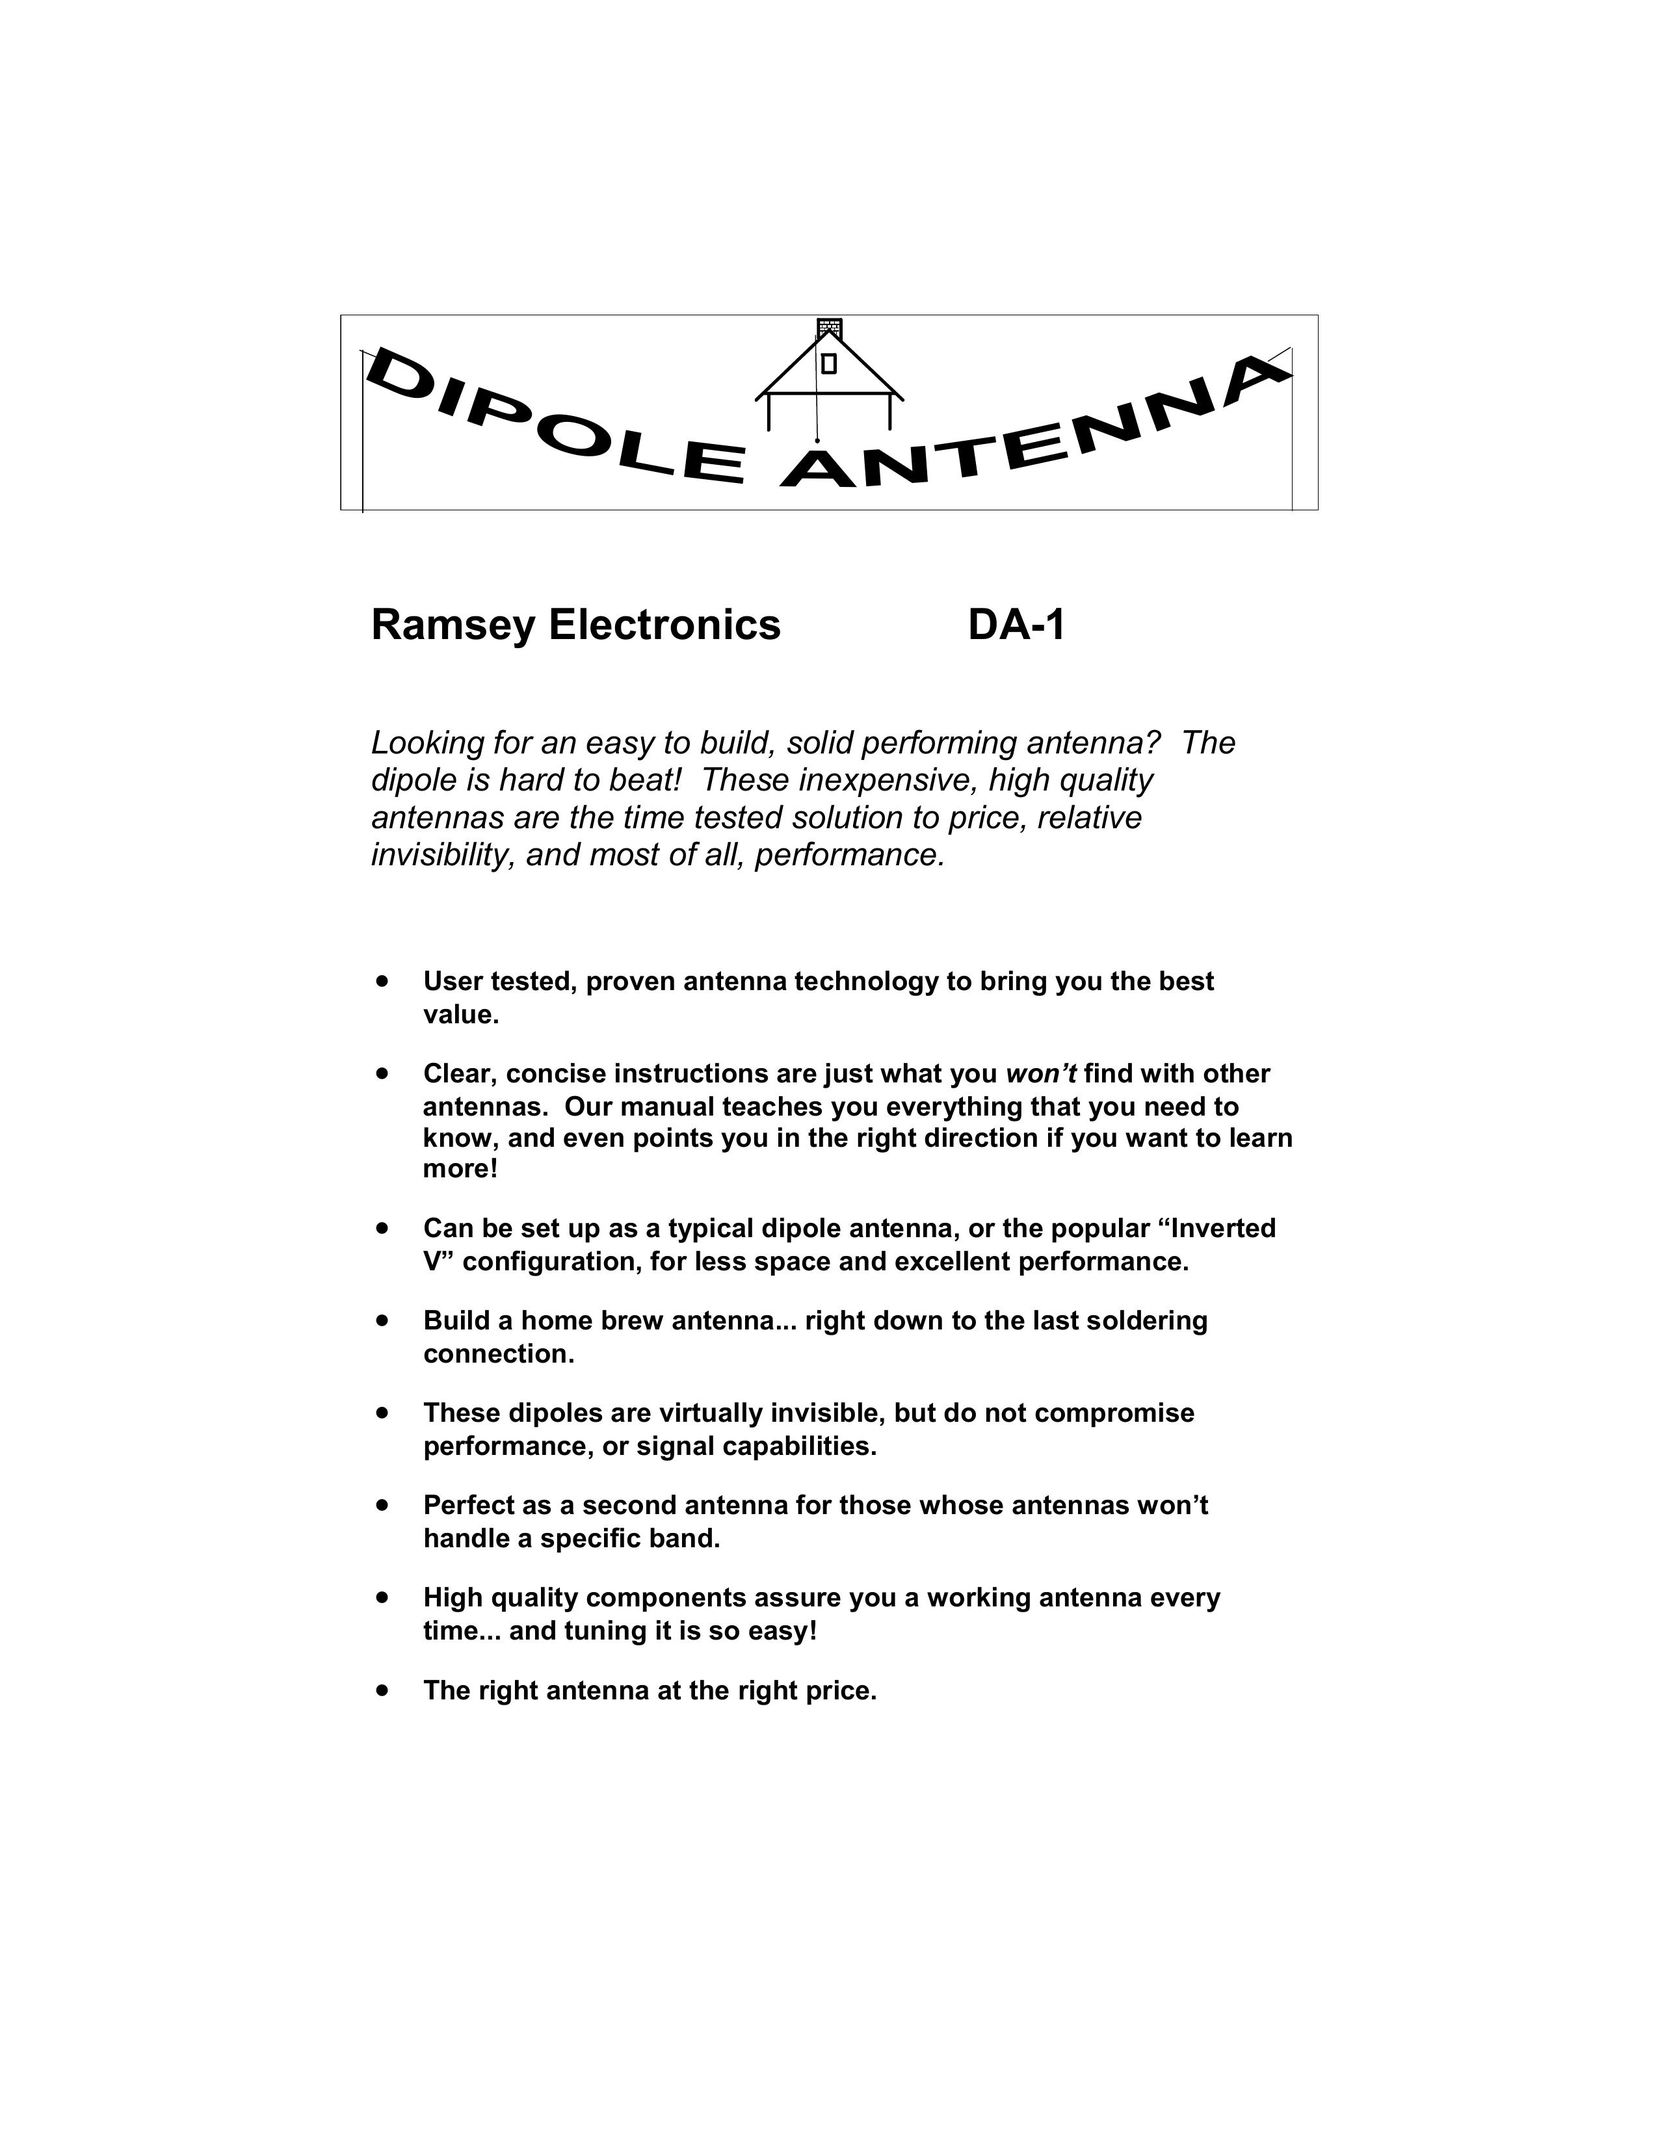 Ramsey Electronics DA-1 Stereo System User Manual